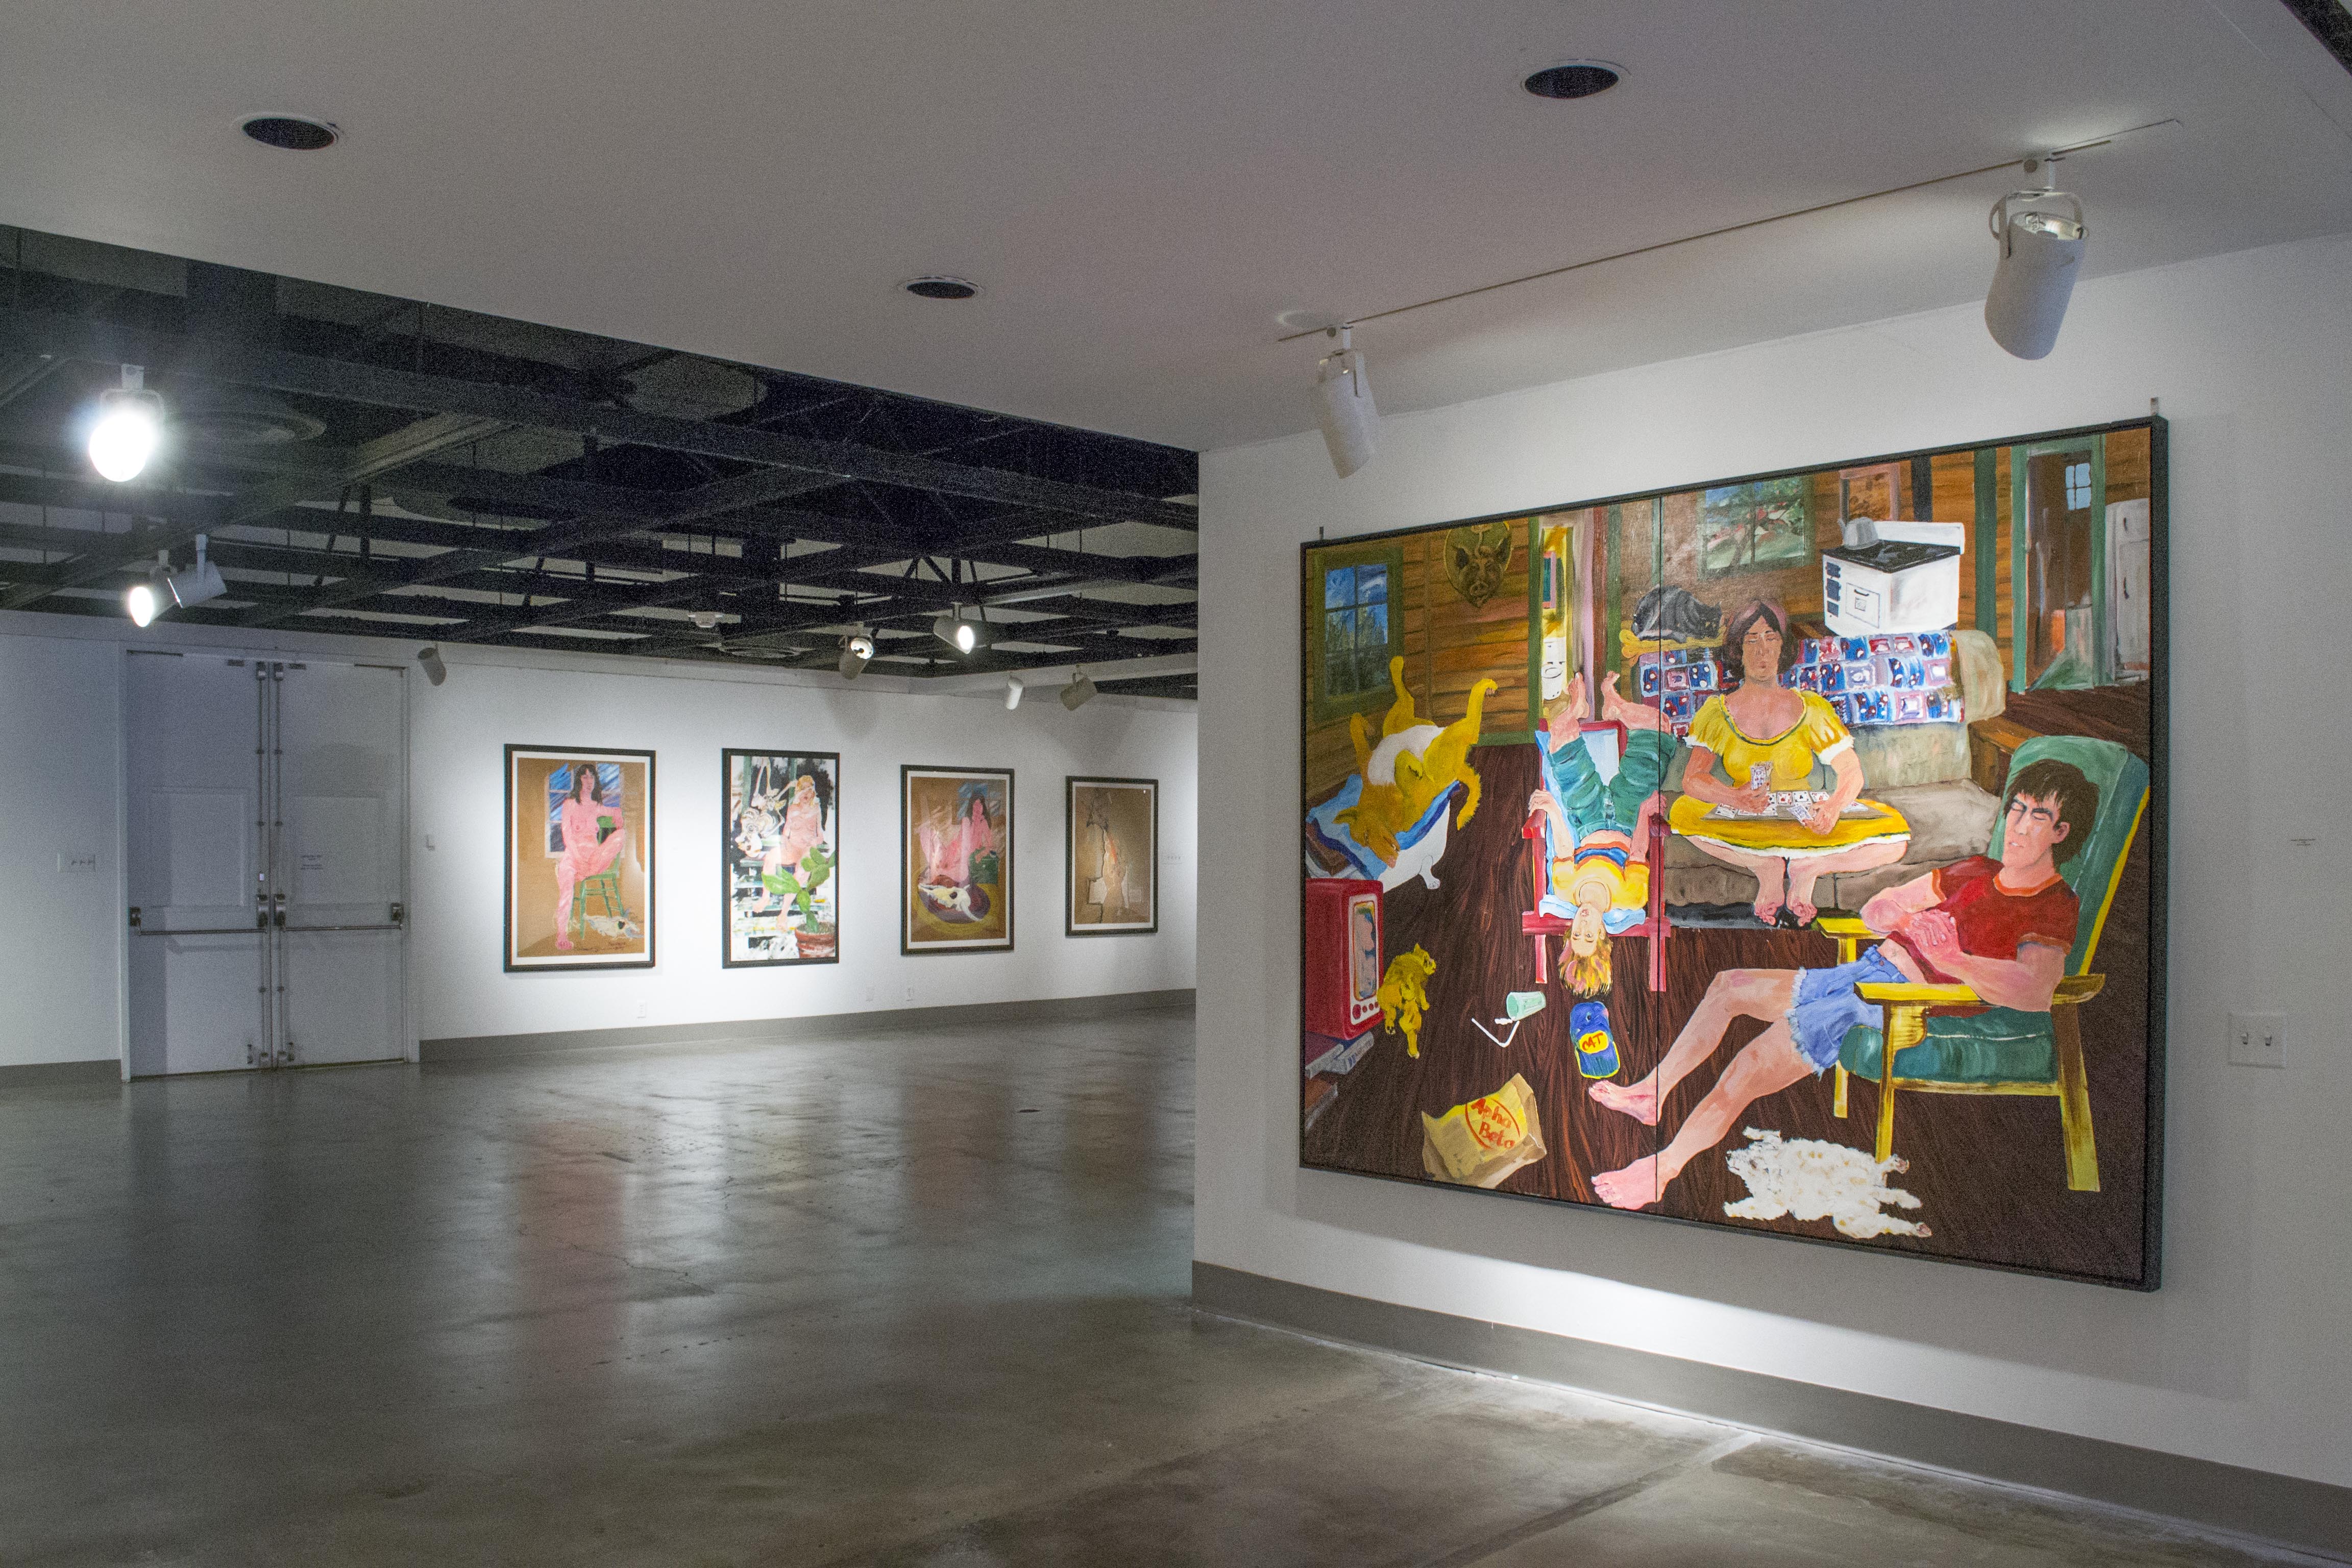 Installation View, Corridor of Gallery, Charles Fredrick Retrospective Exhibition, Nov. 7, 2019 to Dec. 21, 2013.